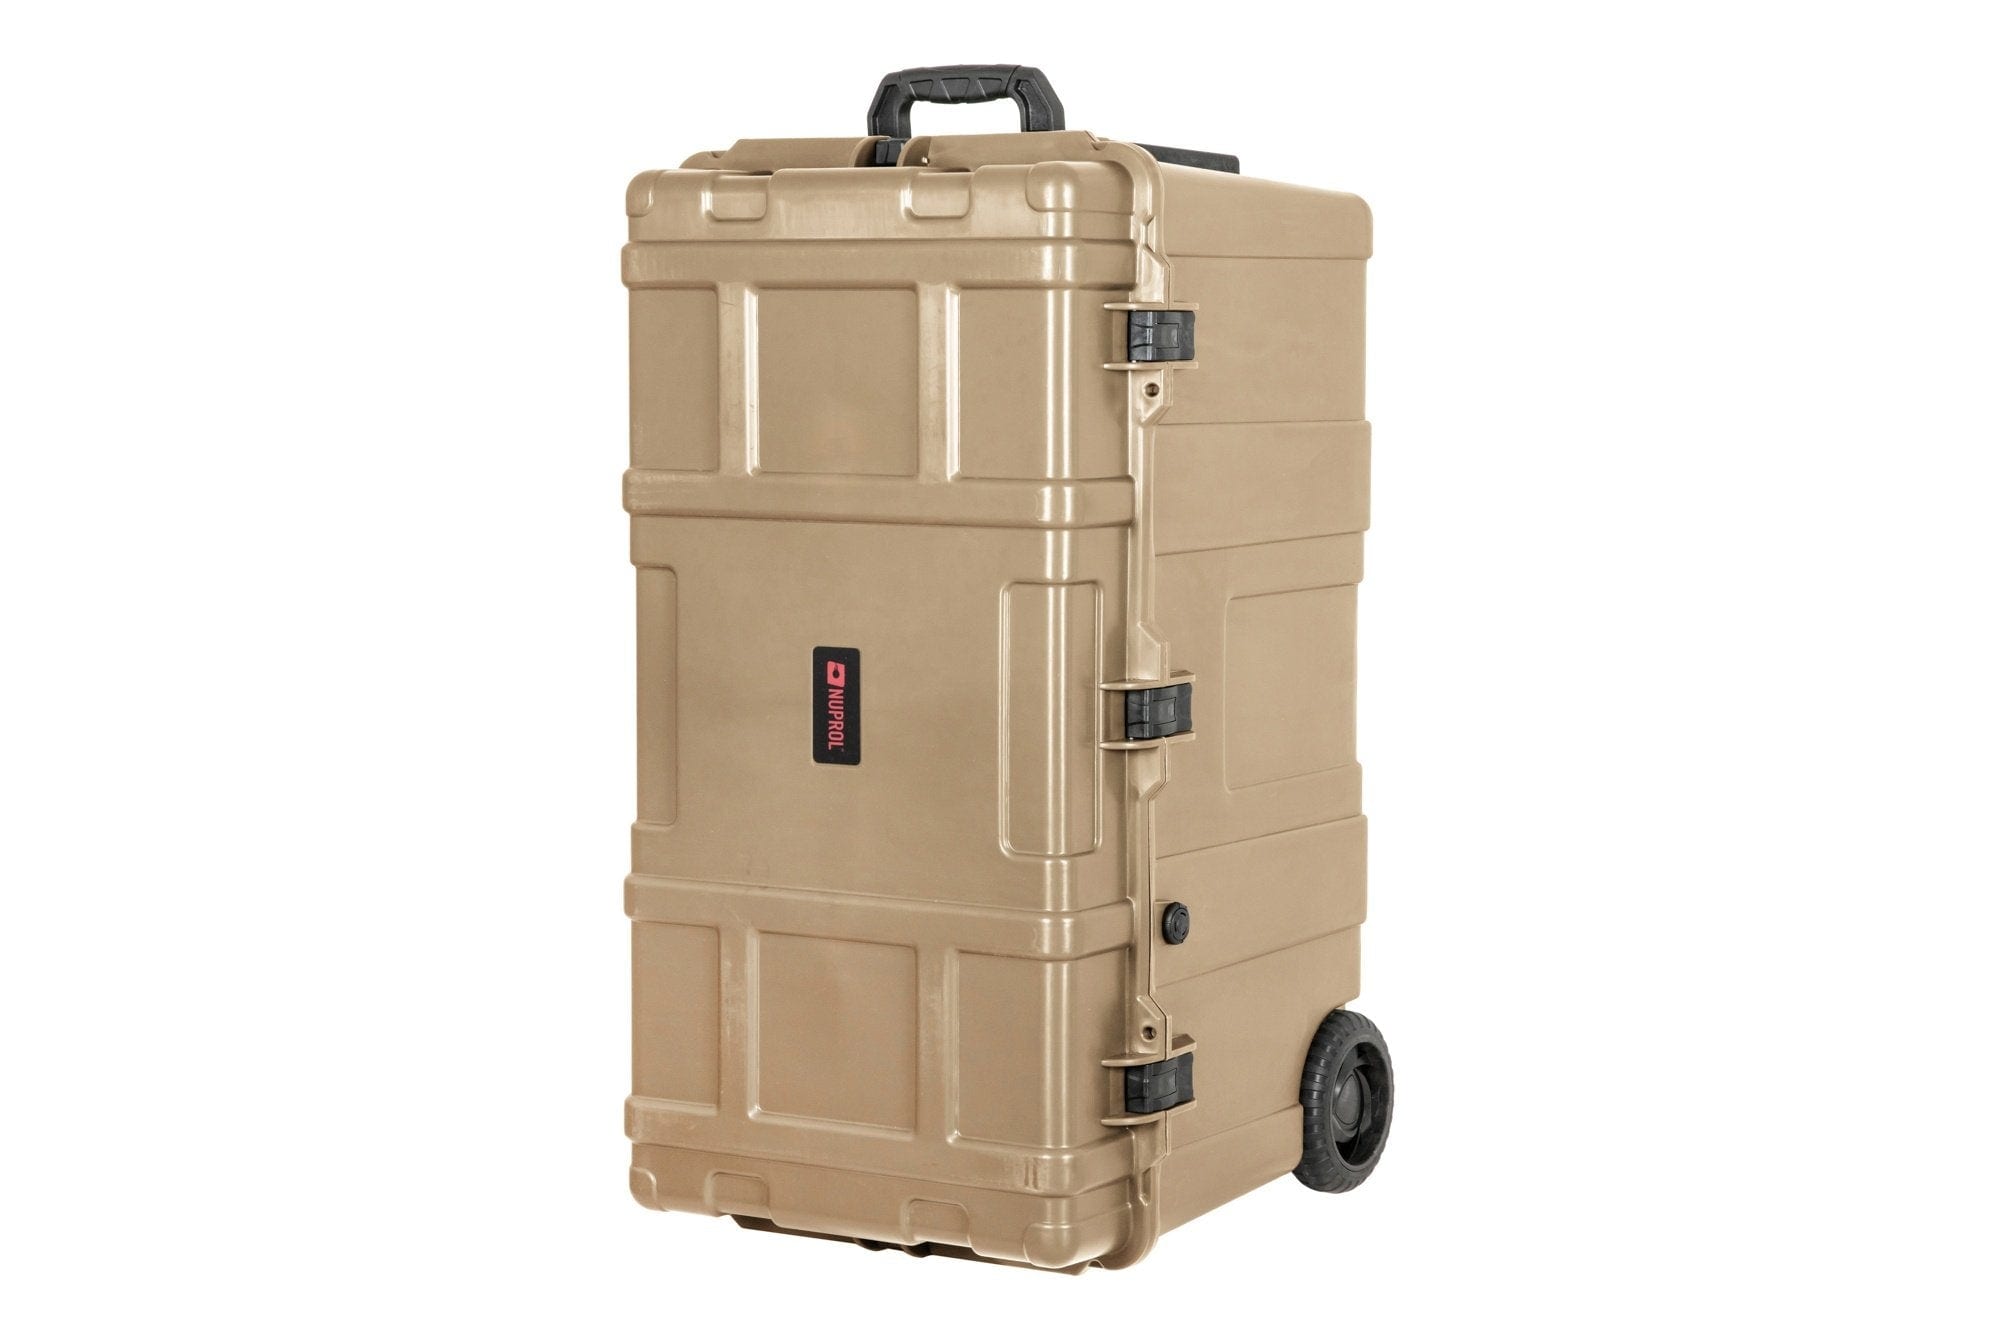 Kit Box Hard Case – Tan